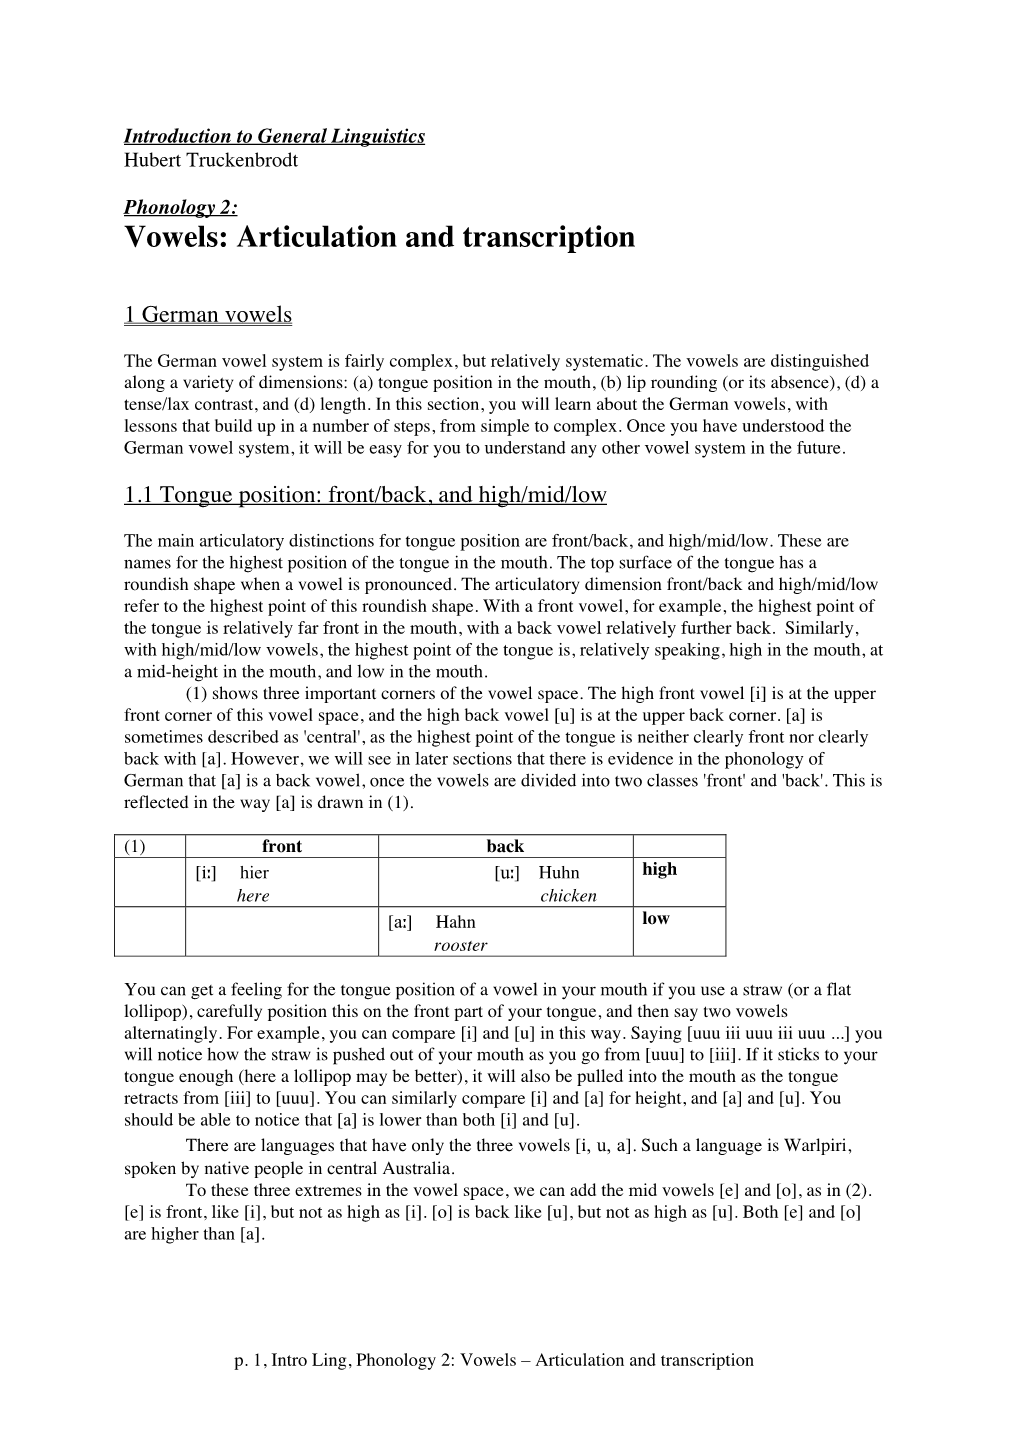 Vowels: Articulation and Transcription